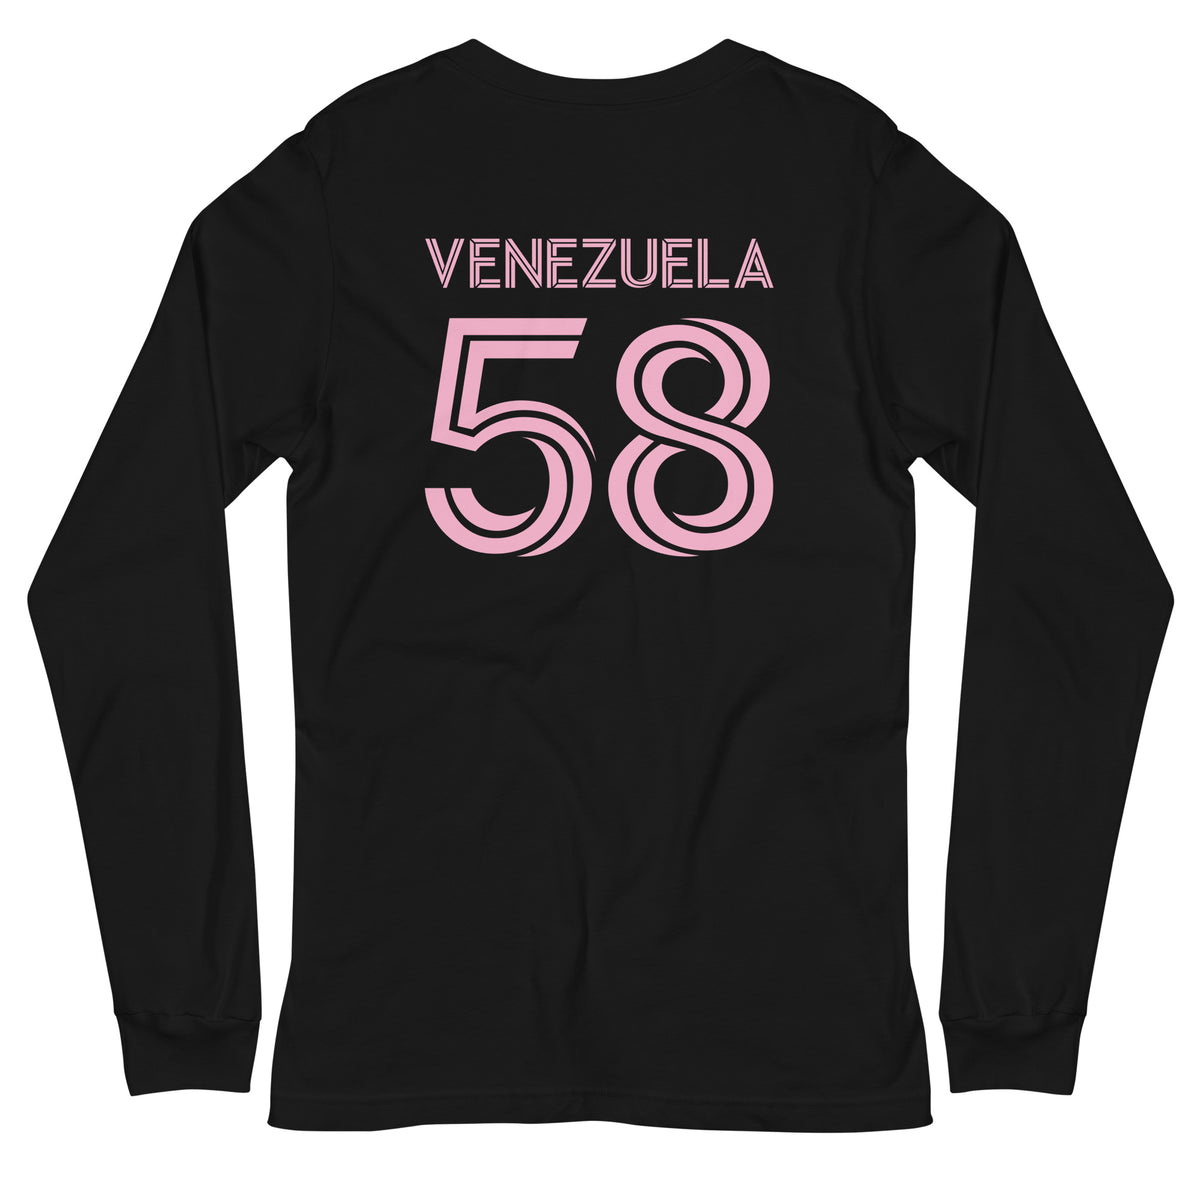 Venezuela T-shirt (Long-Sleeve - Unisex) Venezuela Mundial - Club de Fútbol Internacional